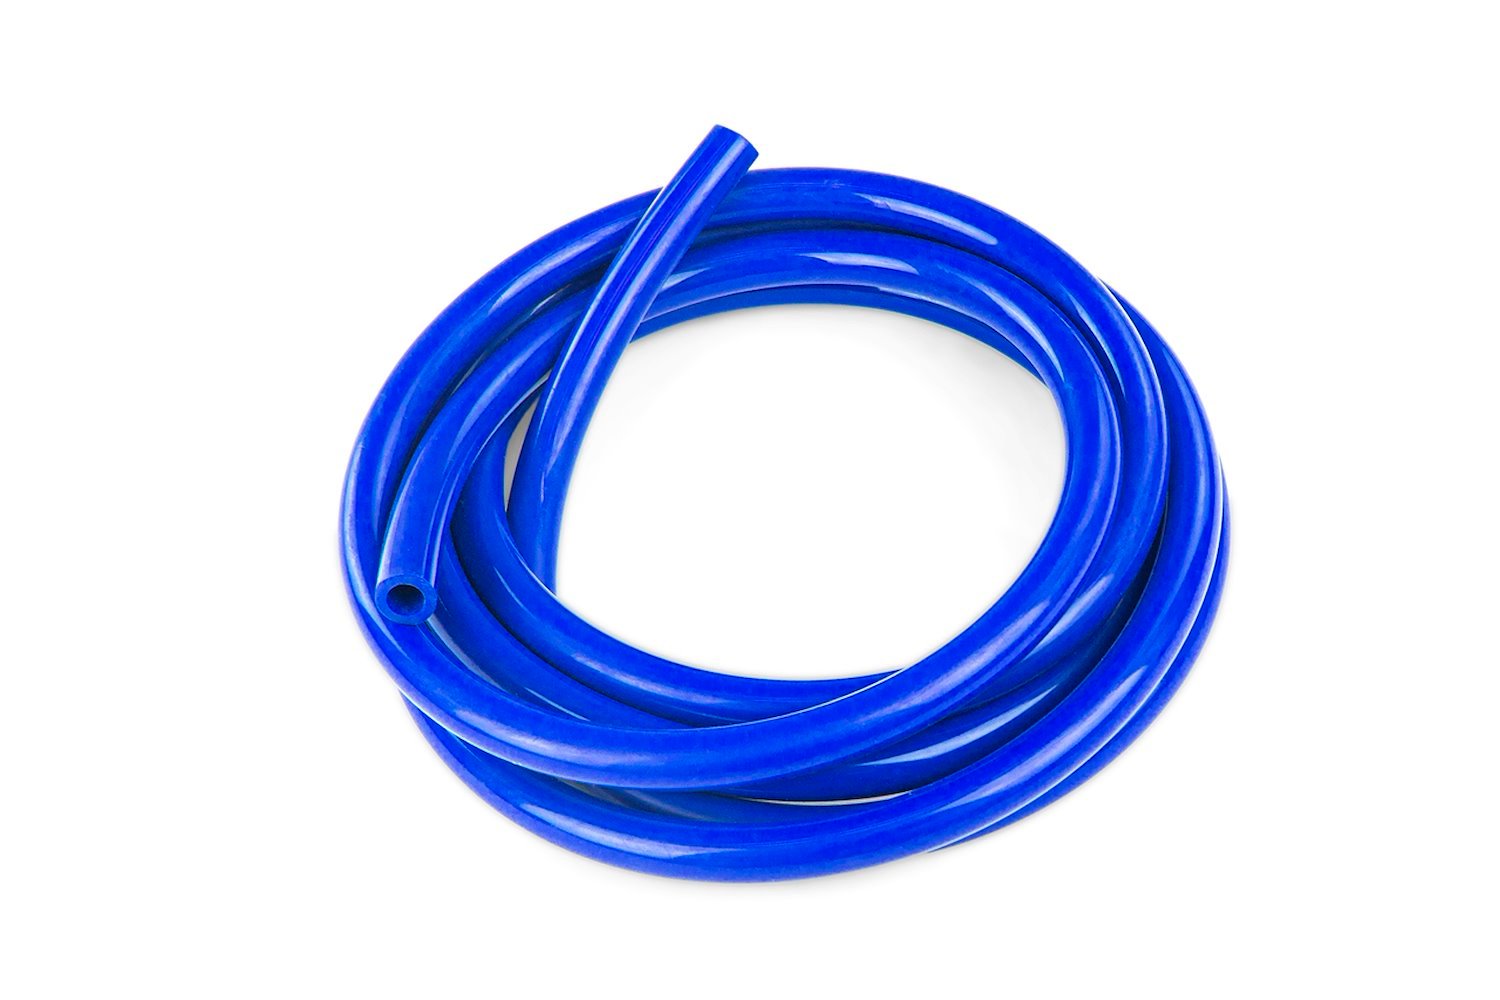 HTSVH6-BLUE High-Temperature Silicone Vacuum Hose Tubing, 1/4 in. ID, Blue